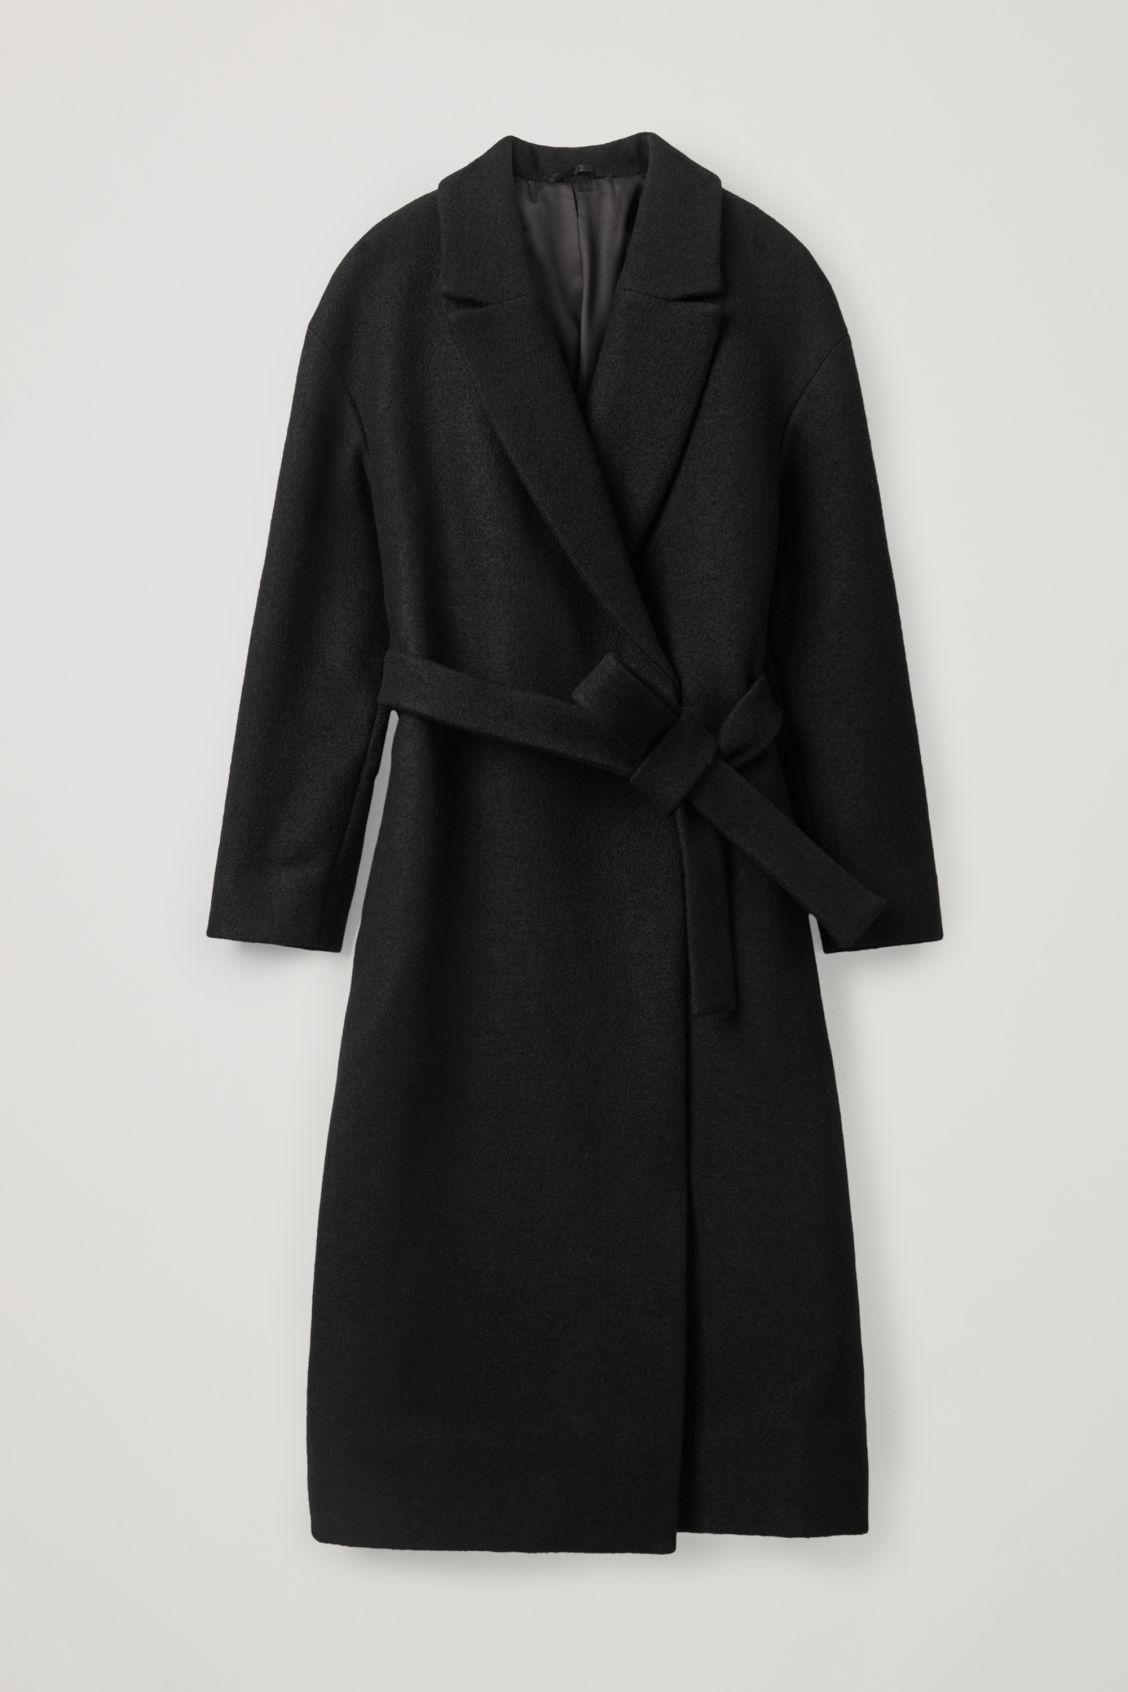 COS Oversized Belted Wool Coat in Black | Lyst